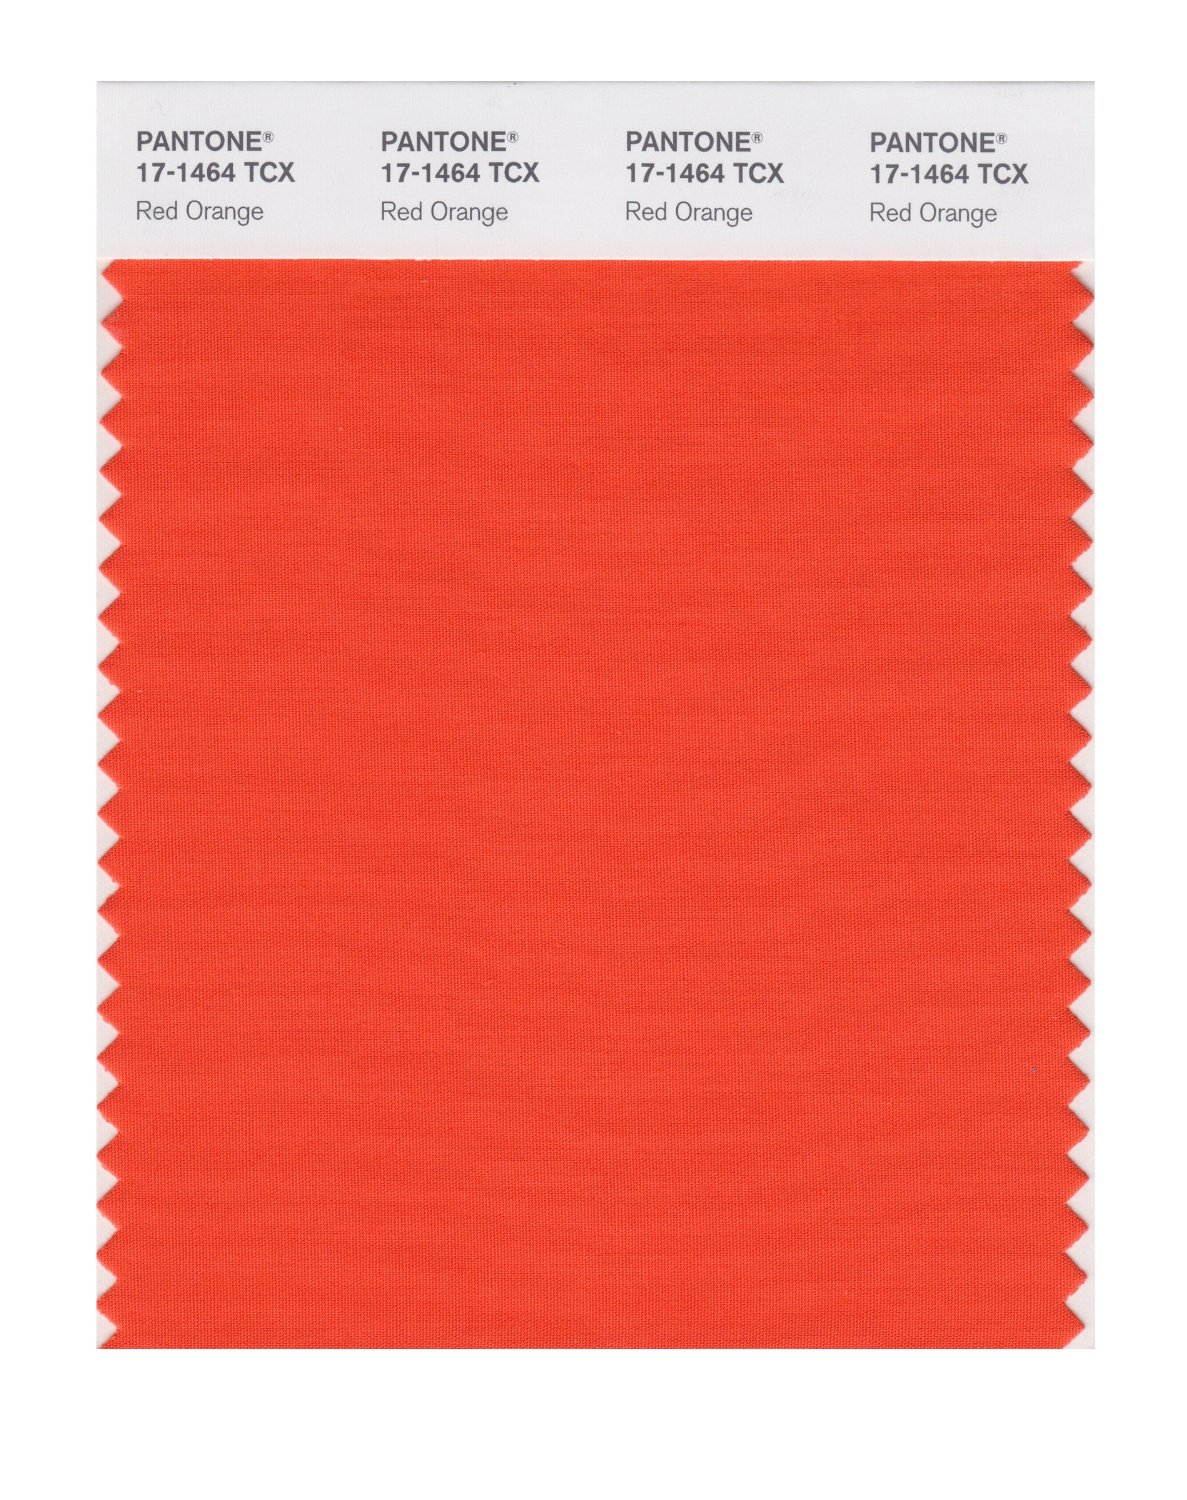 Pantone Cotton Swatch 17-1464 Red Orange